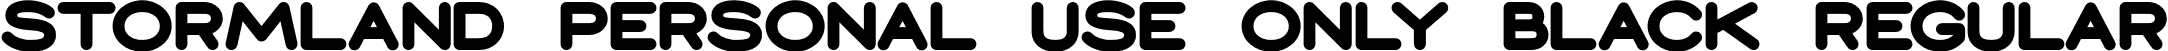 Stormland PERSONAL USE ONLY Black Regular font | StormlandPersonalUseOnlyBlack-p7LBv.otf